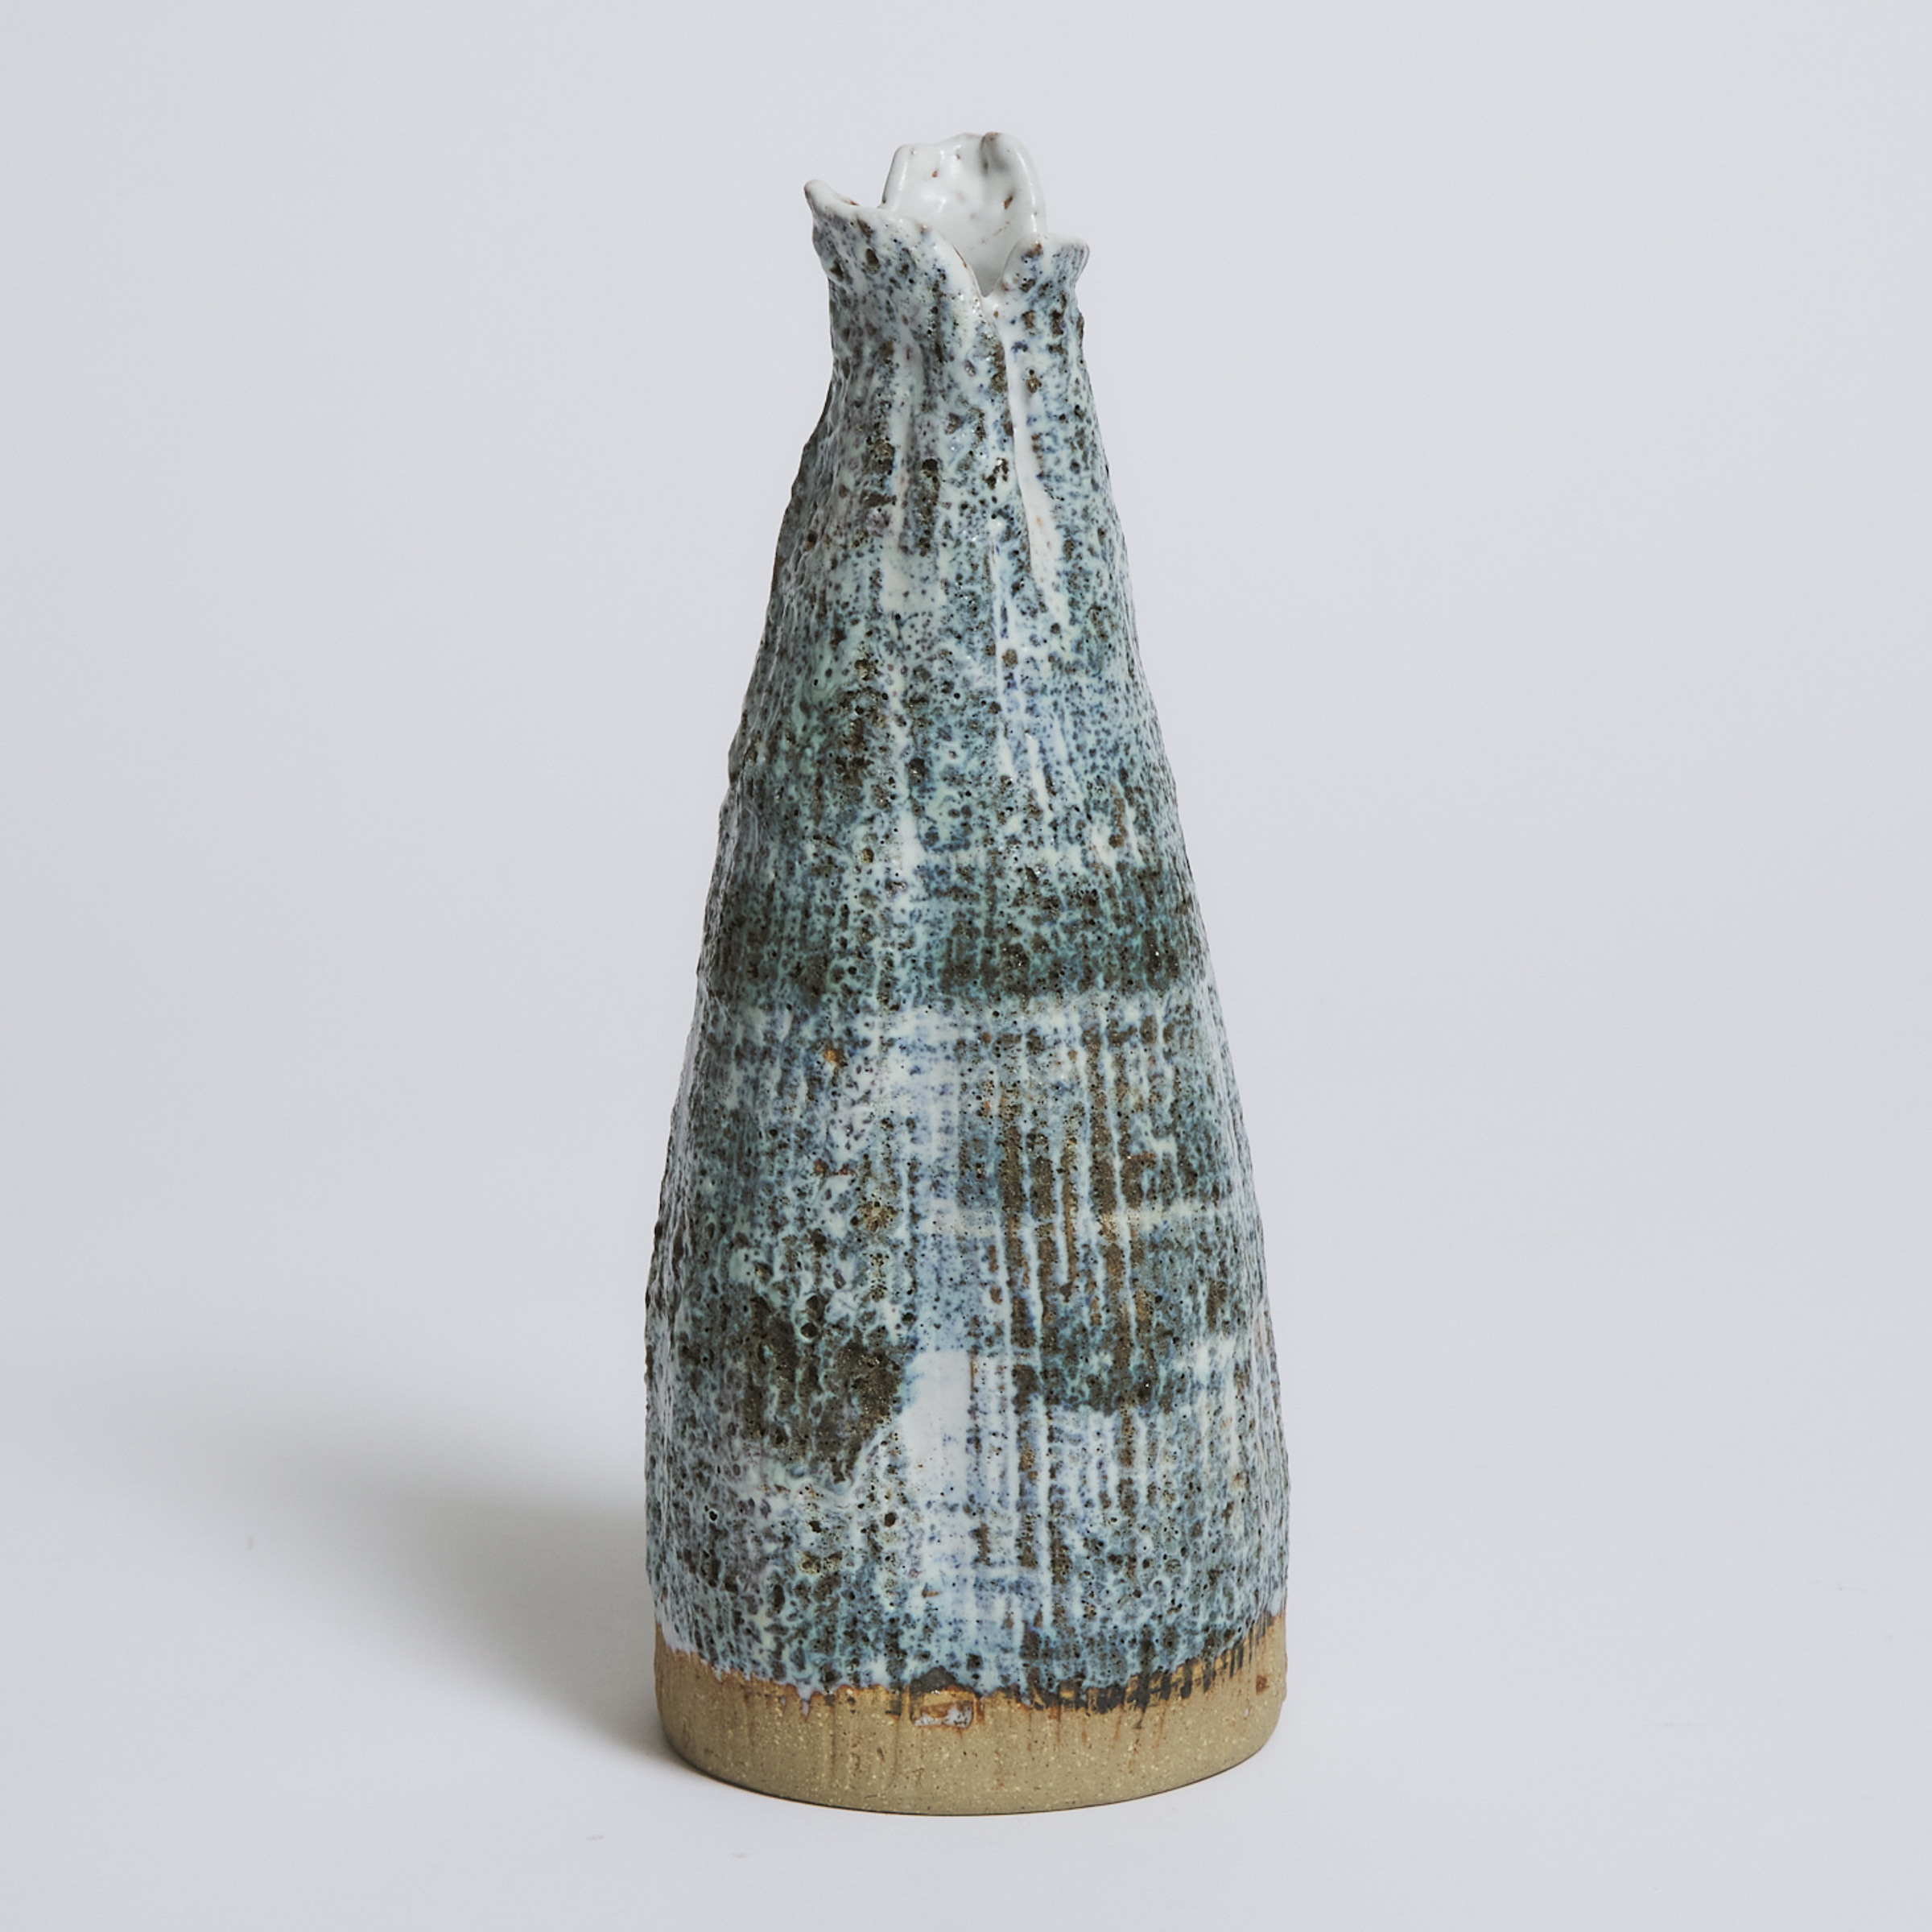 Tessa Kidick (Canadian, 1915-2002), Stoneware Vase, 1974